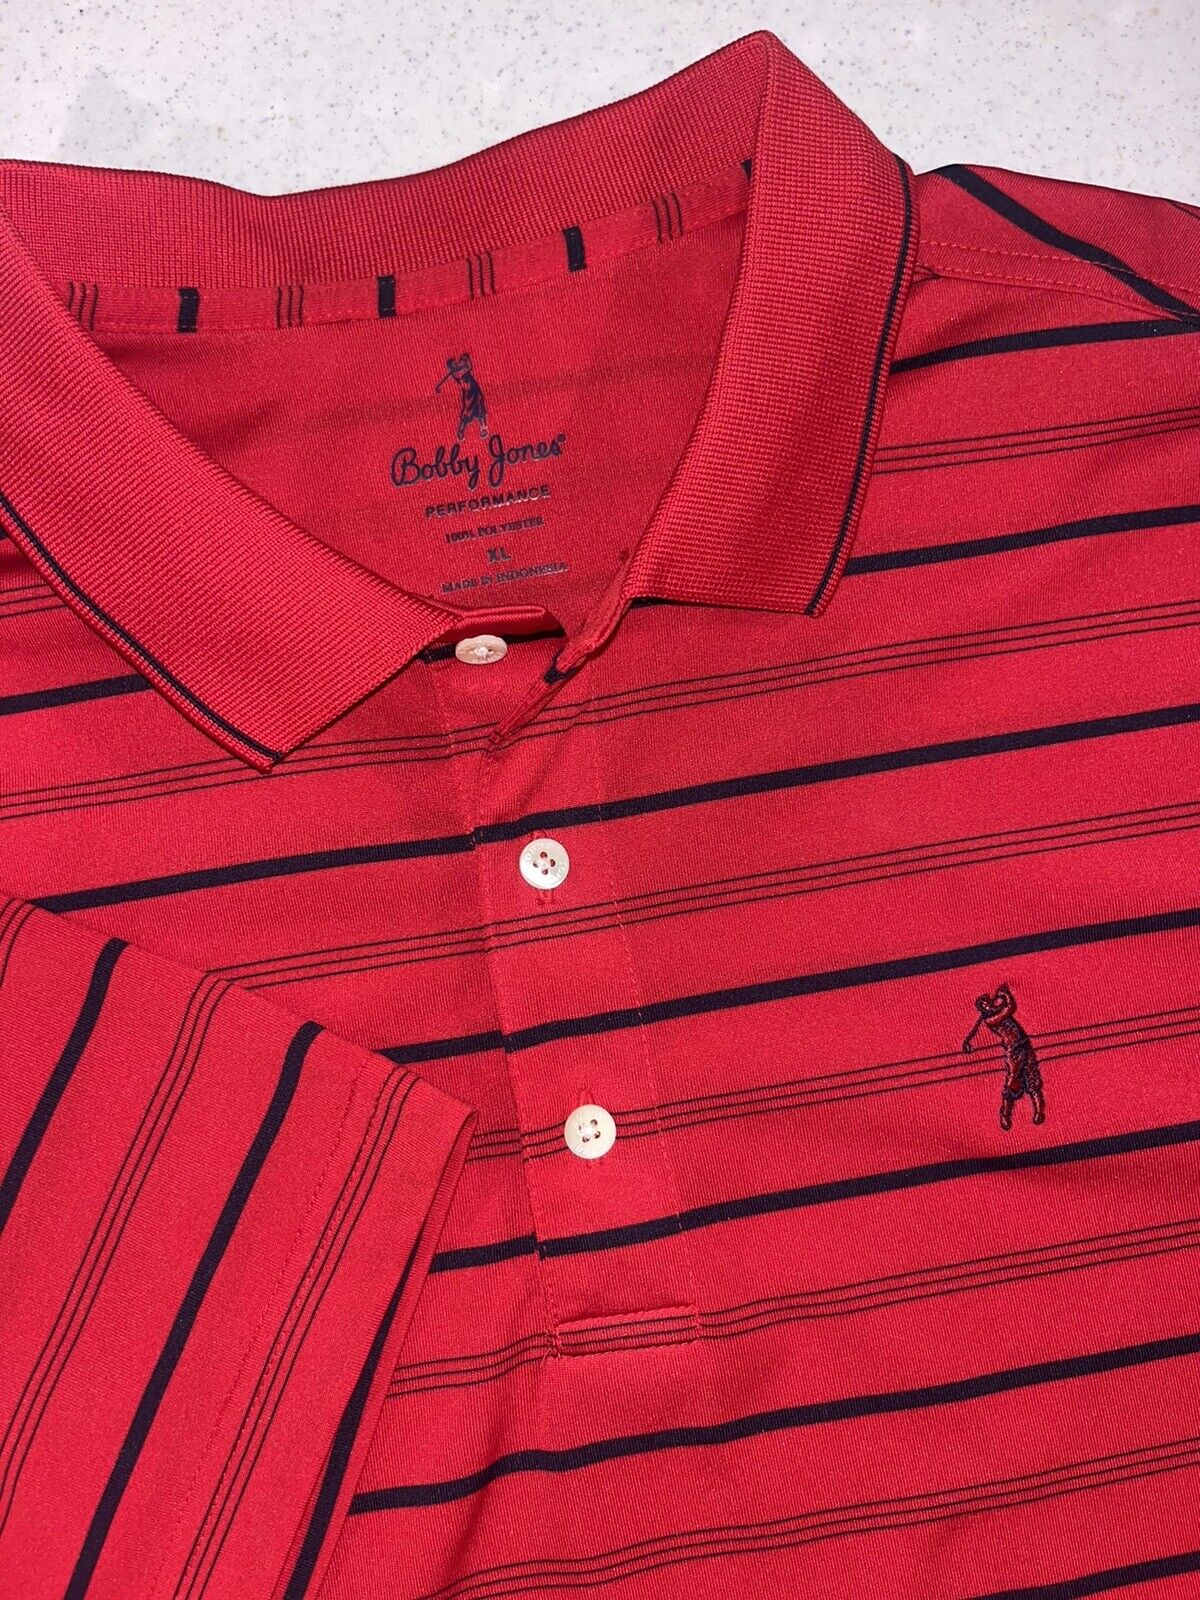 bobby jones golf shirt size XL Performance short sleeves Gorgeous polo with logo